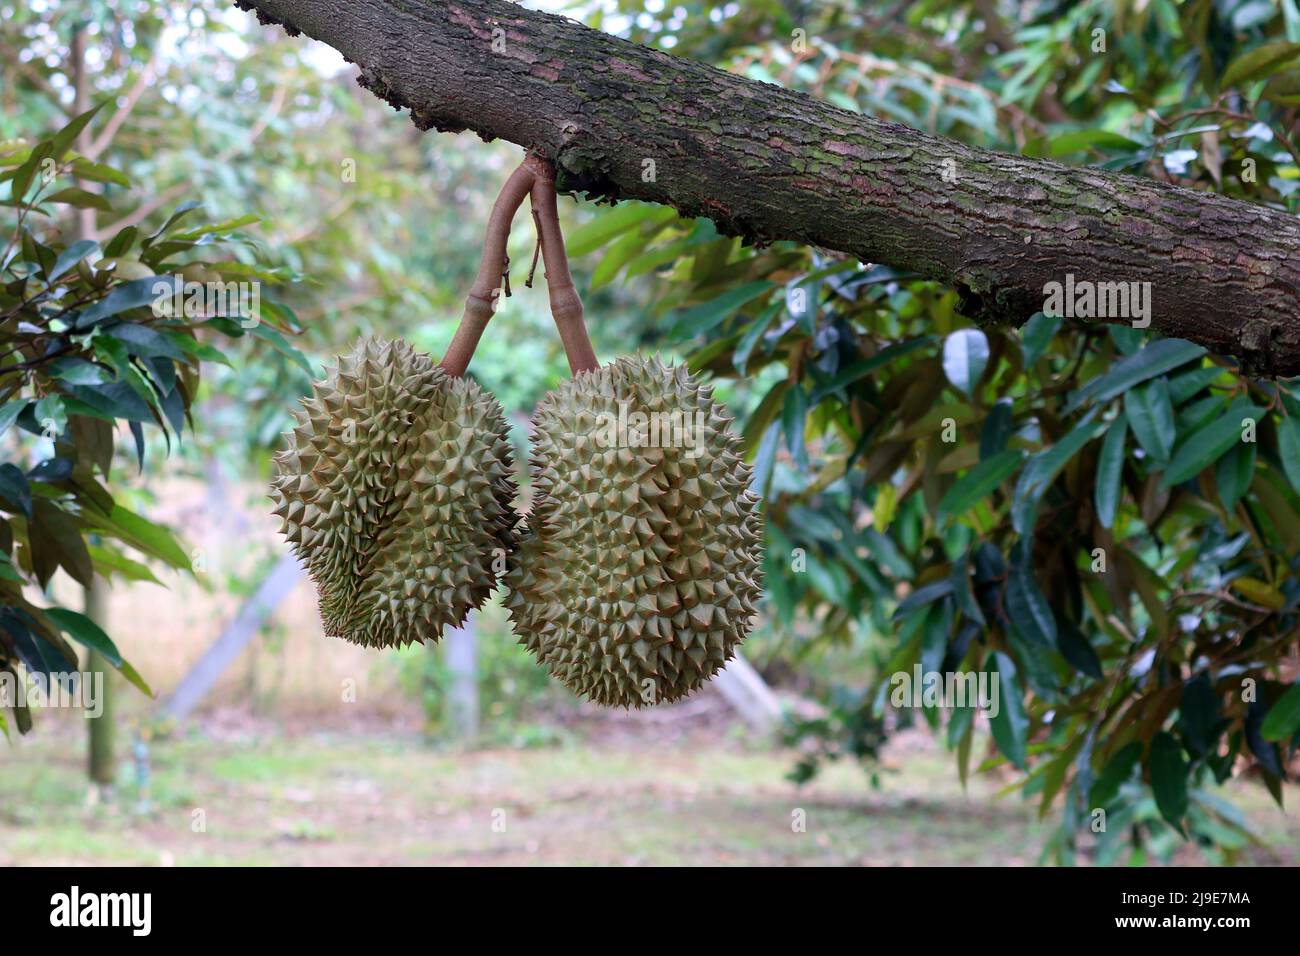 durian fruit on tree in organic farm Stock Photo